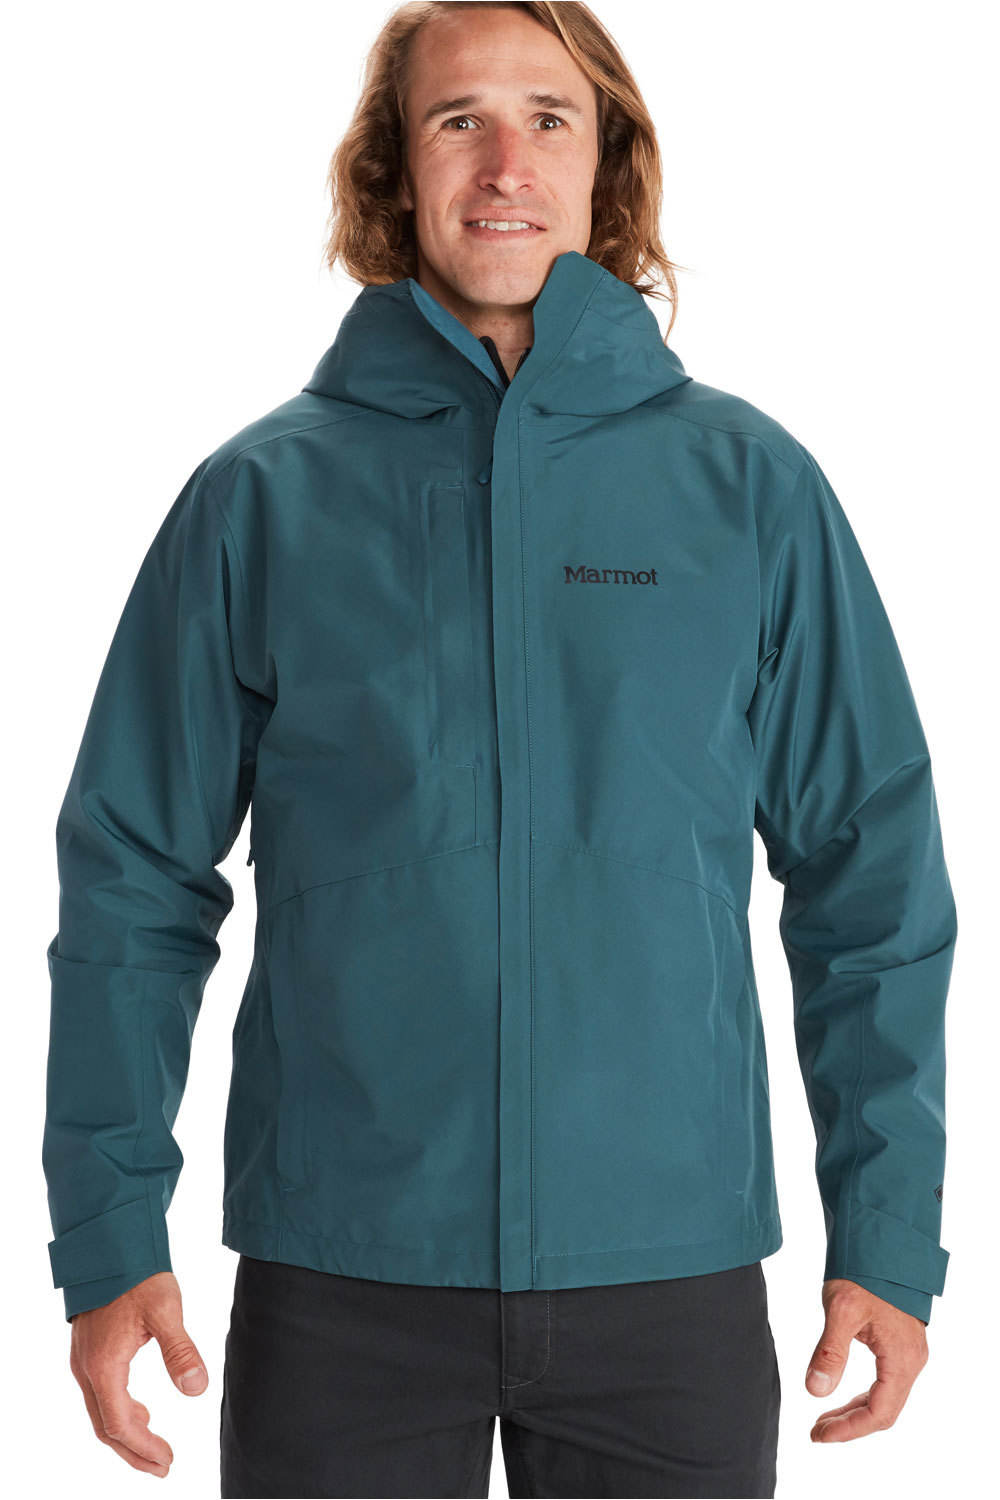 Marmot chaqueta impermeable hombre Minimalist Jacket vista frontal